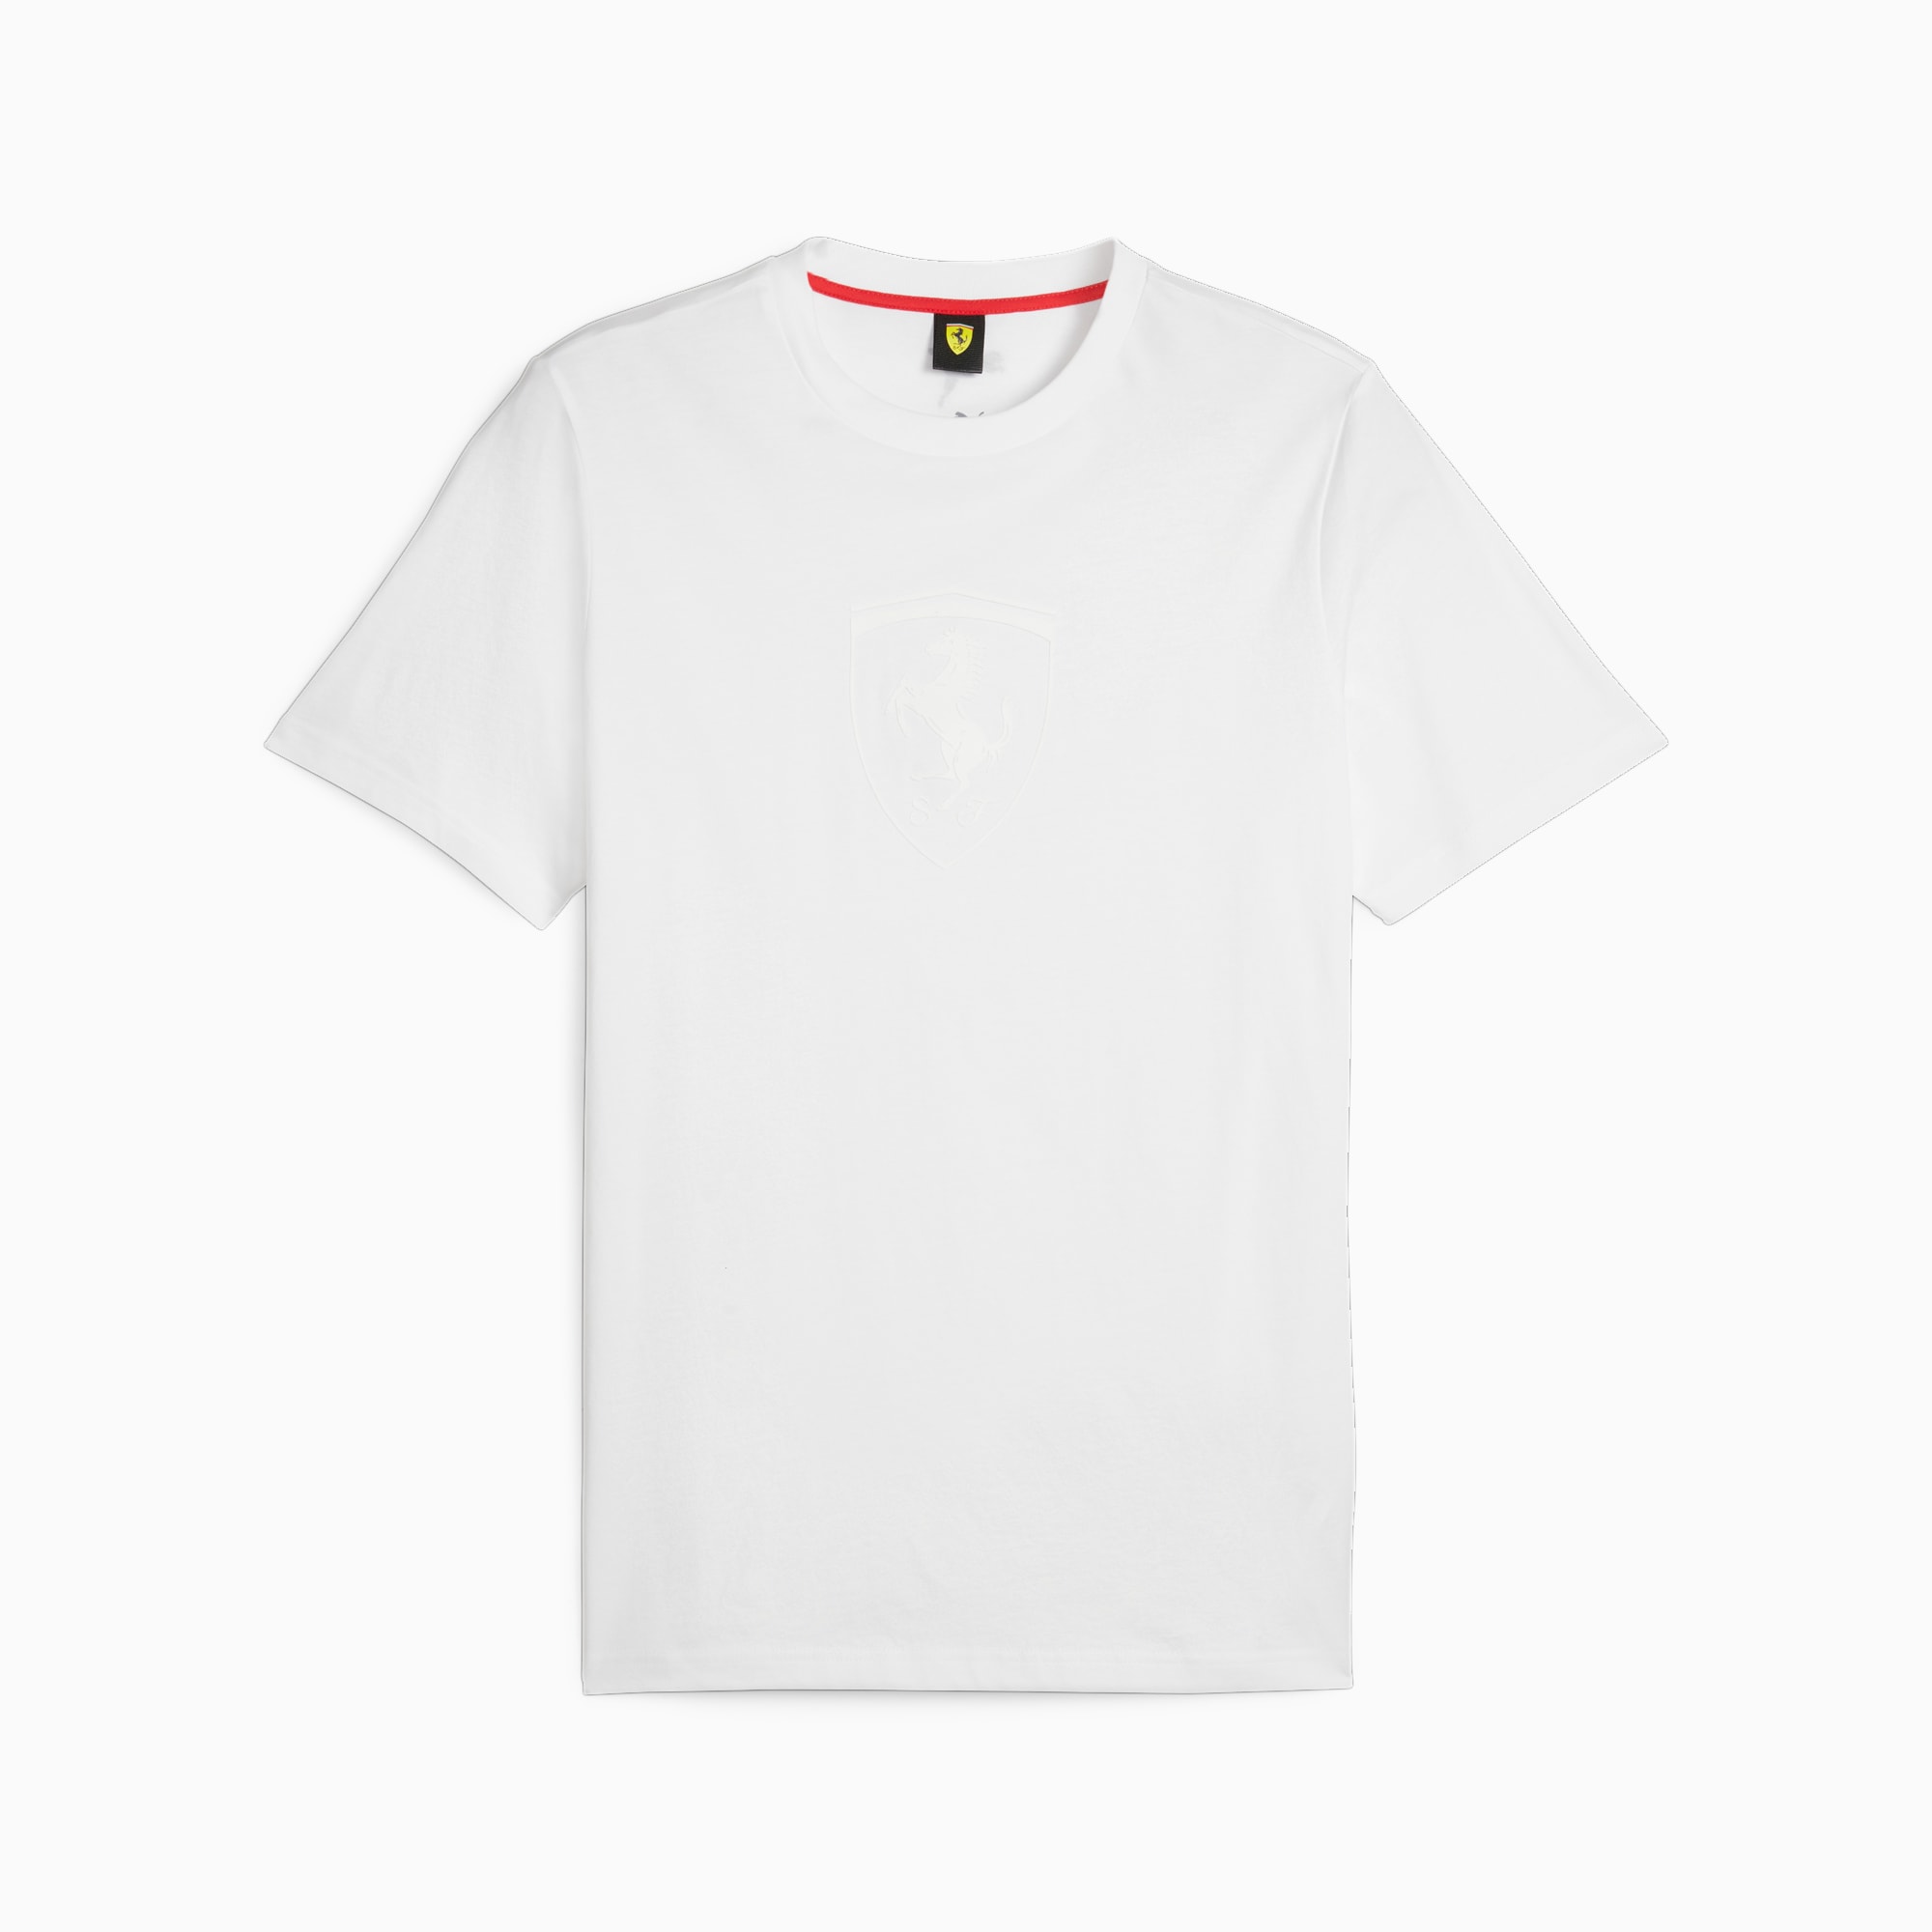 PUMA Scuderia Ferrari Race Big Shield Men's Motorsport Tonal T-Shirt, White, Size XS, Clothing